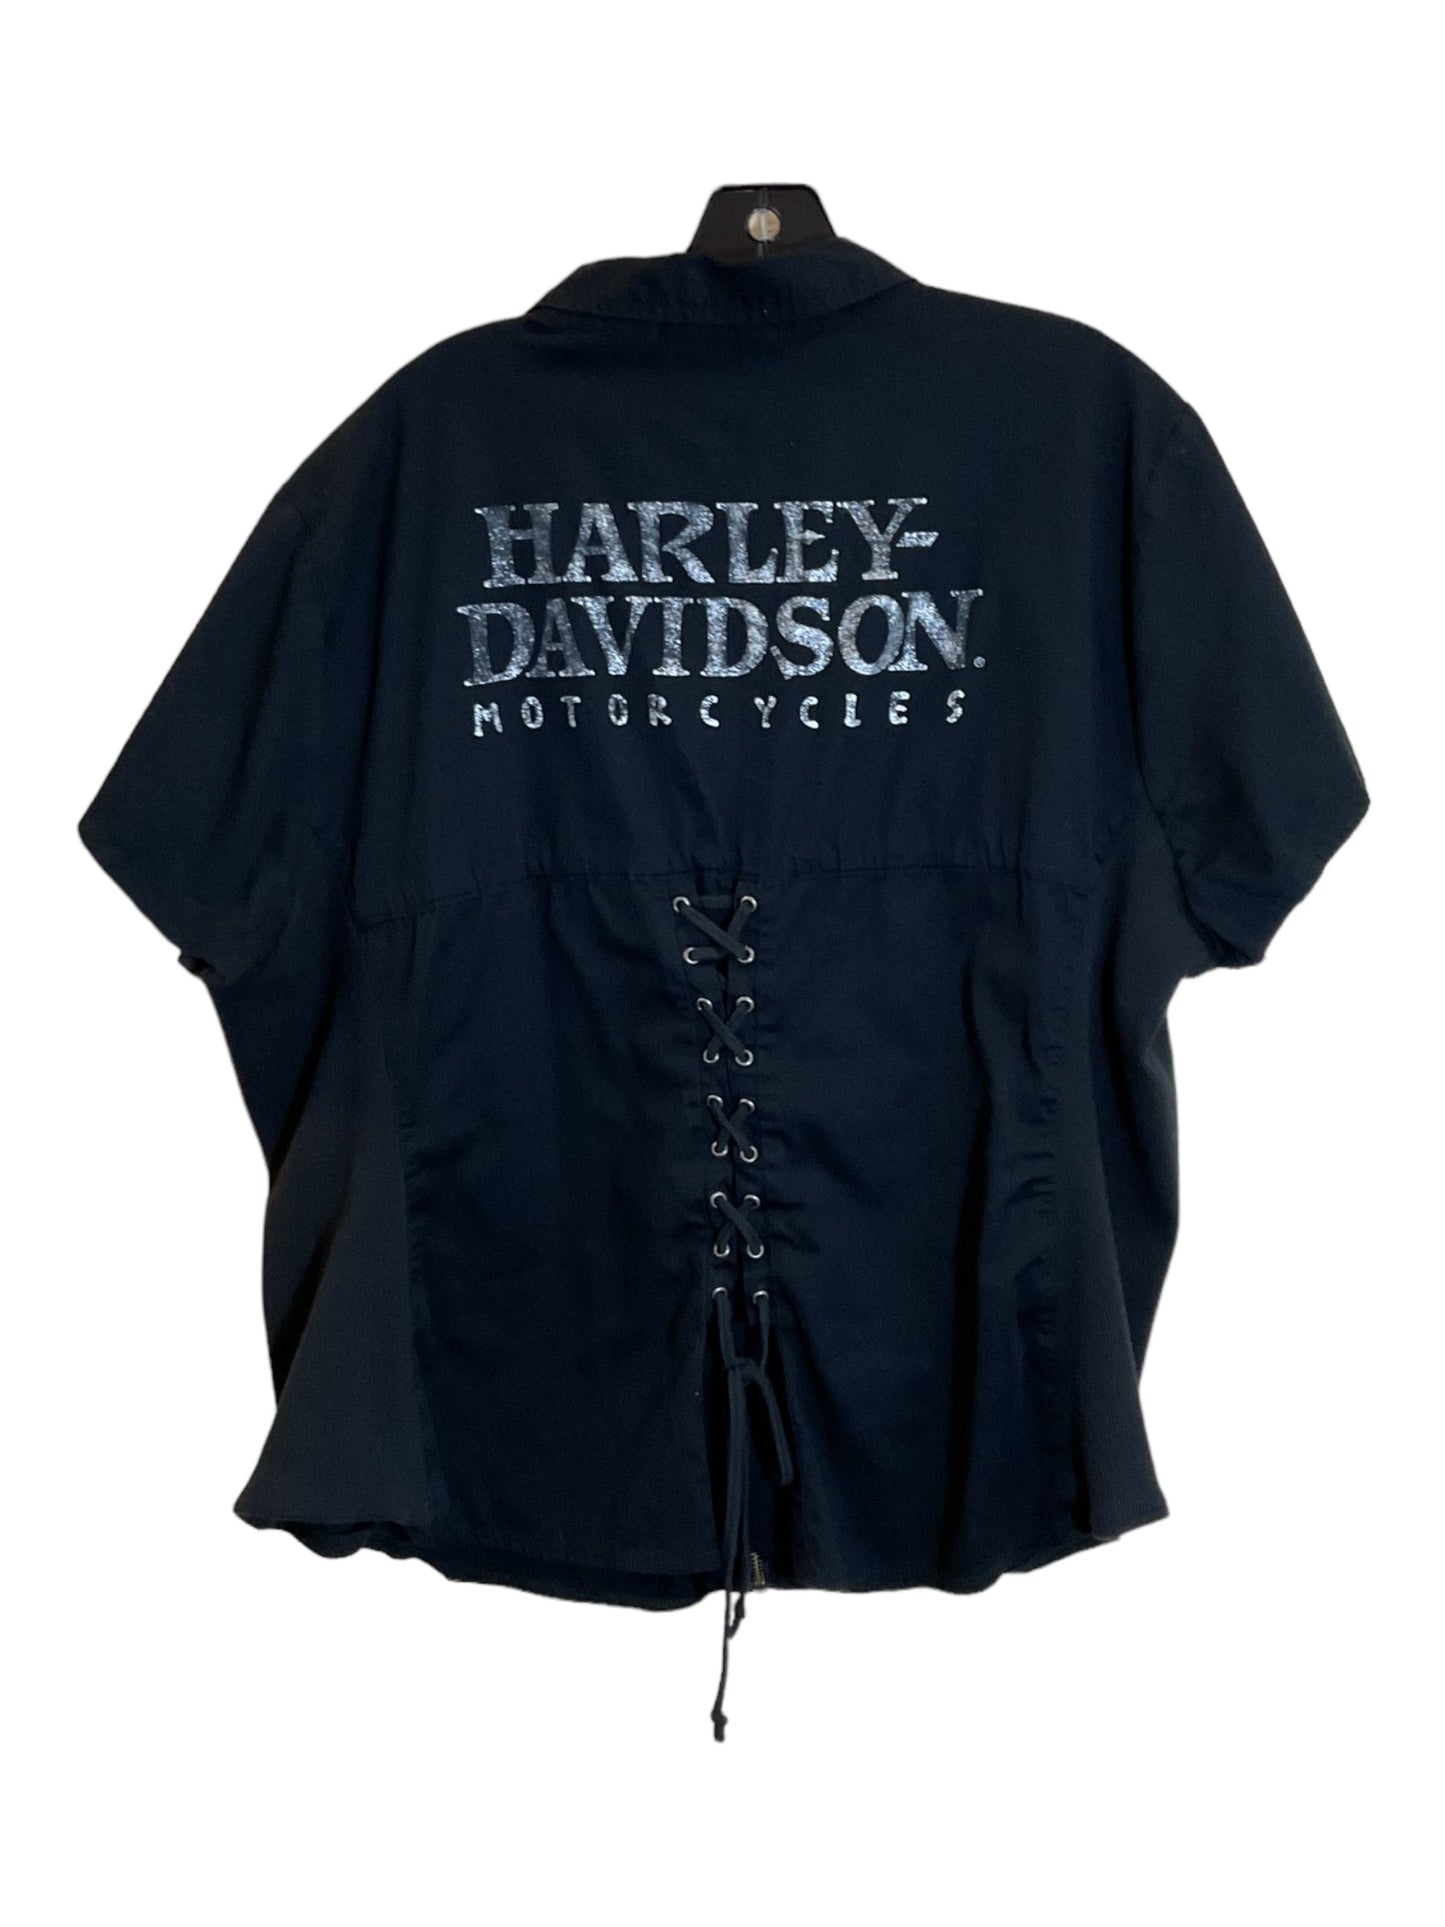 Black Blouse Short Sleeve Harley Davidson, Size 3x